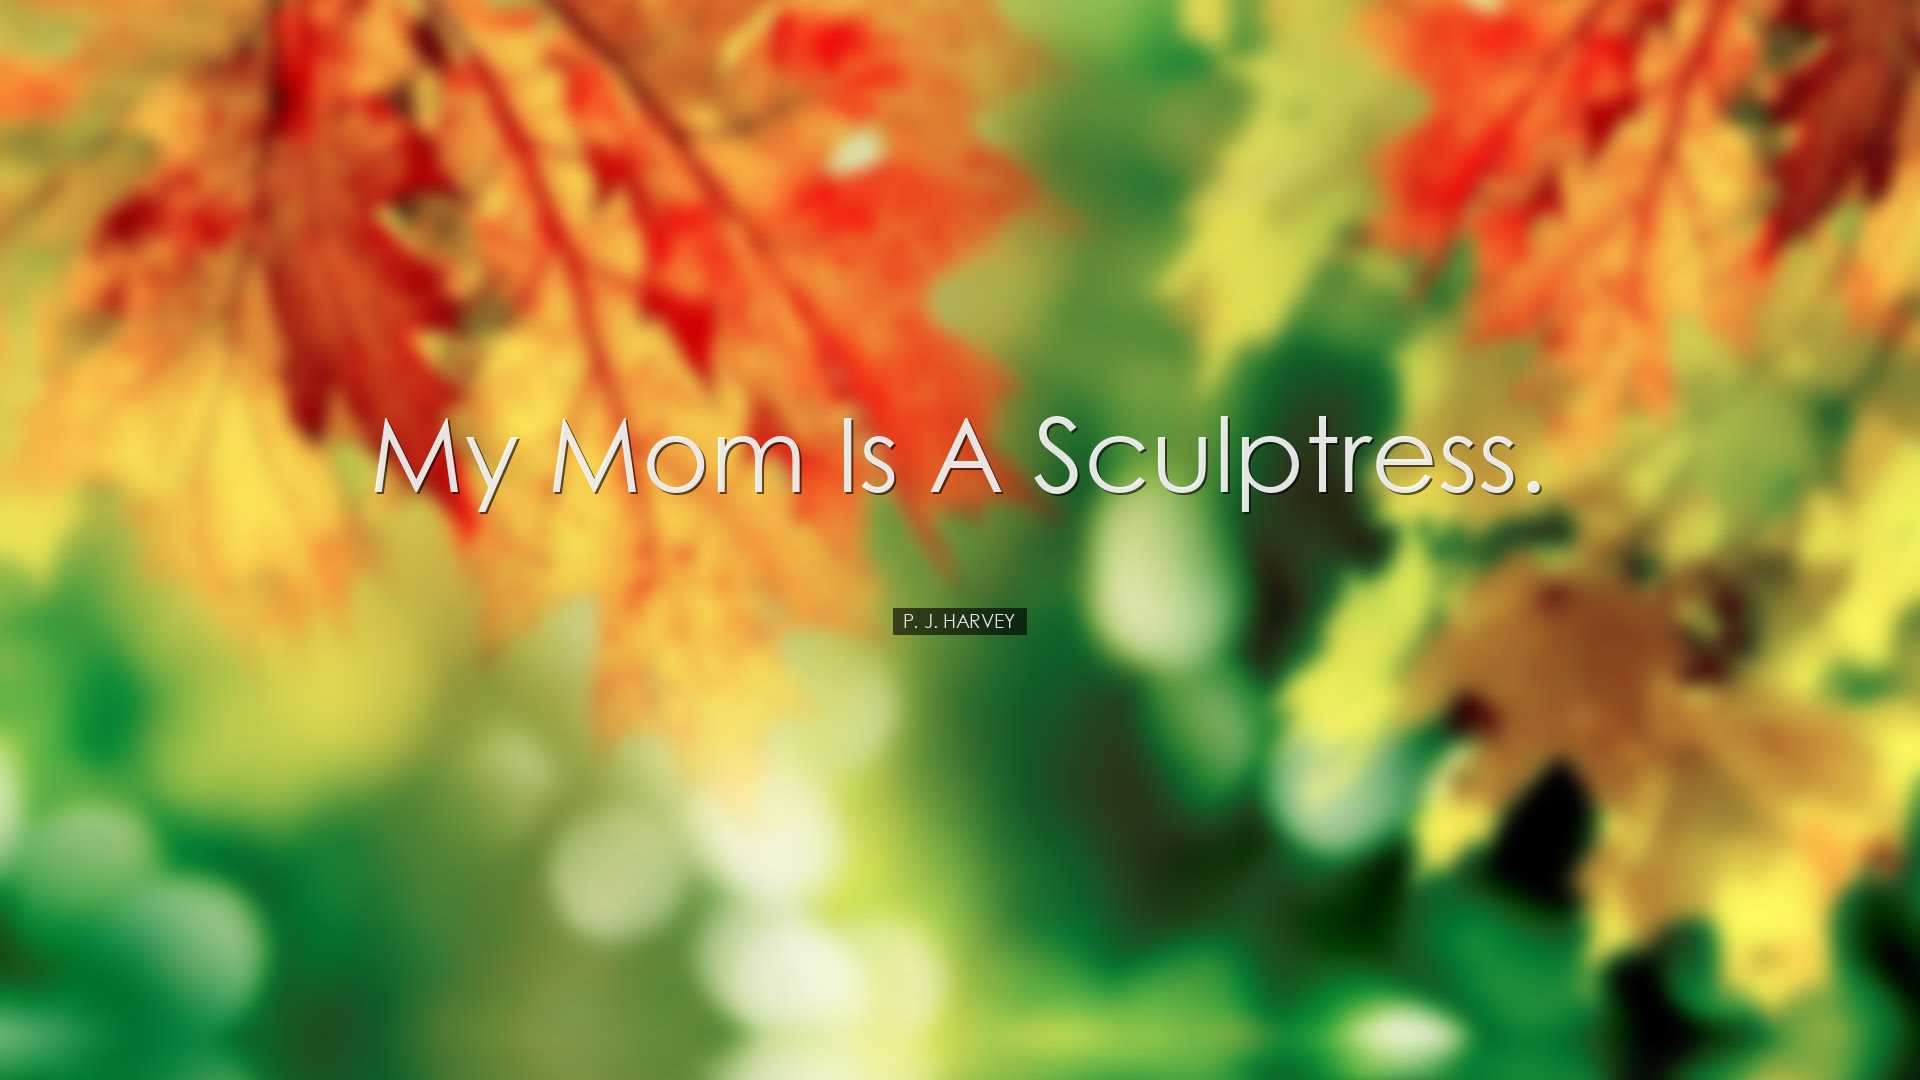 My mom is a sculptress. - P. J. Harvey